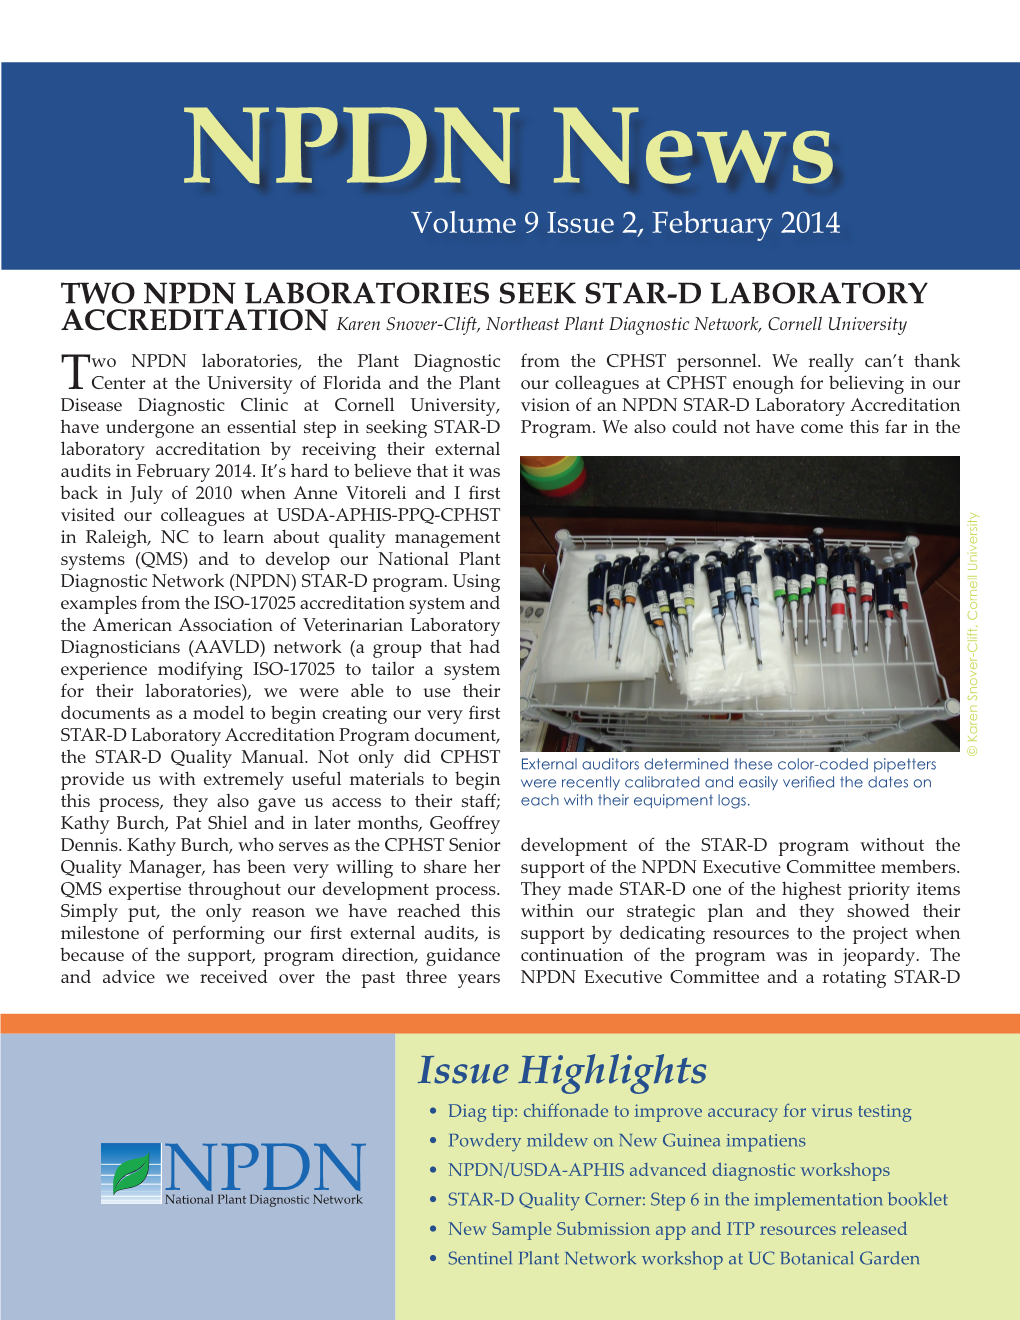 NPDN News Volume 9 Issue 2, February 2014